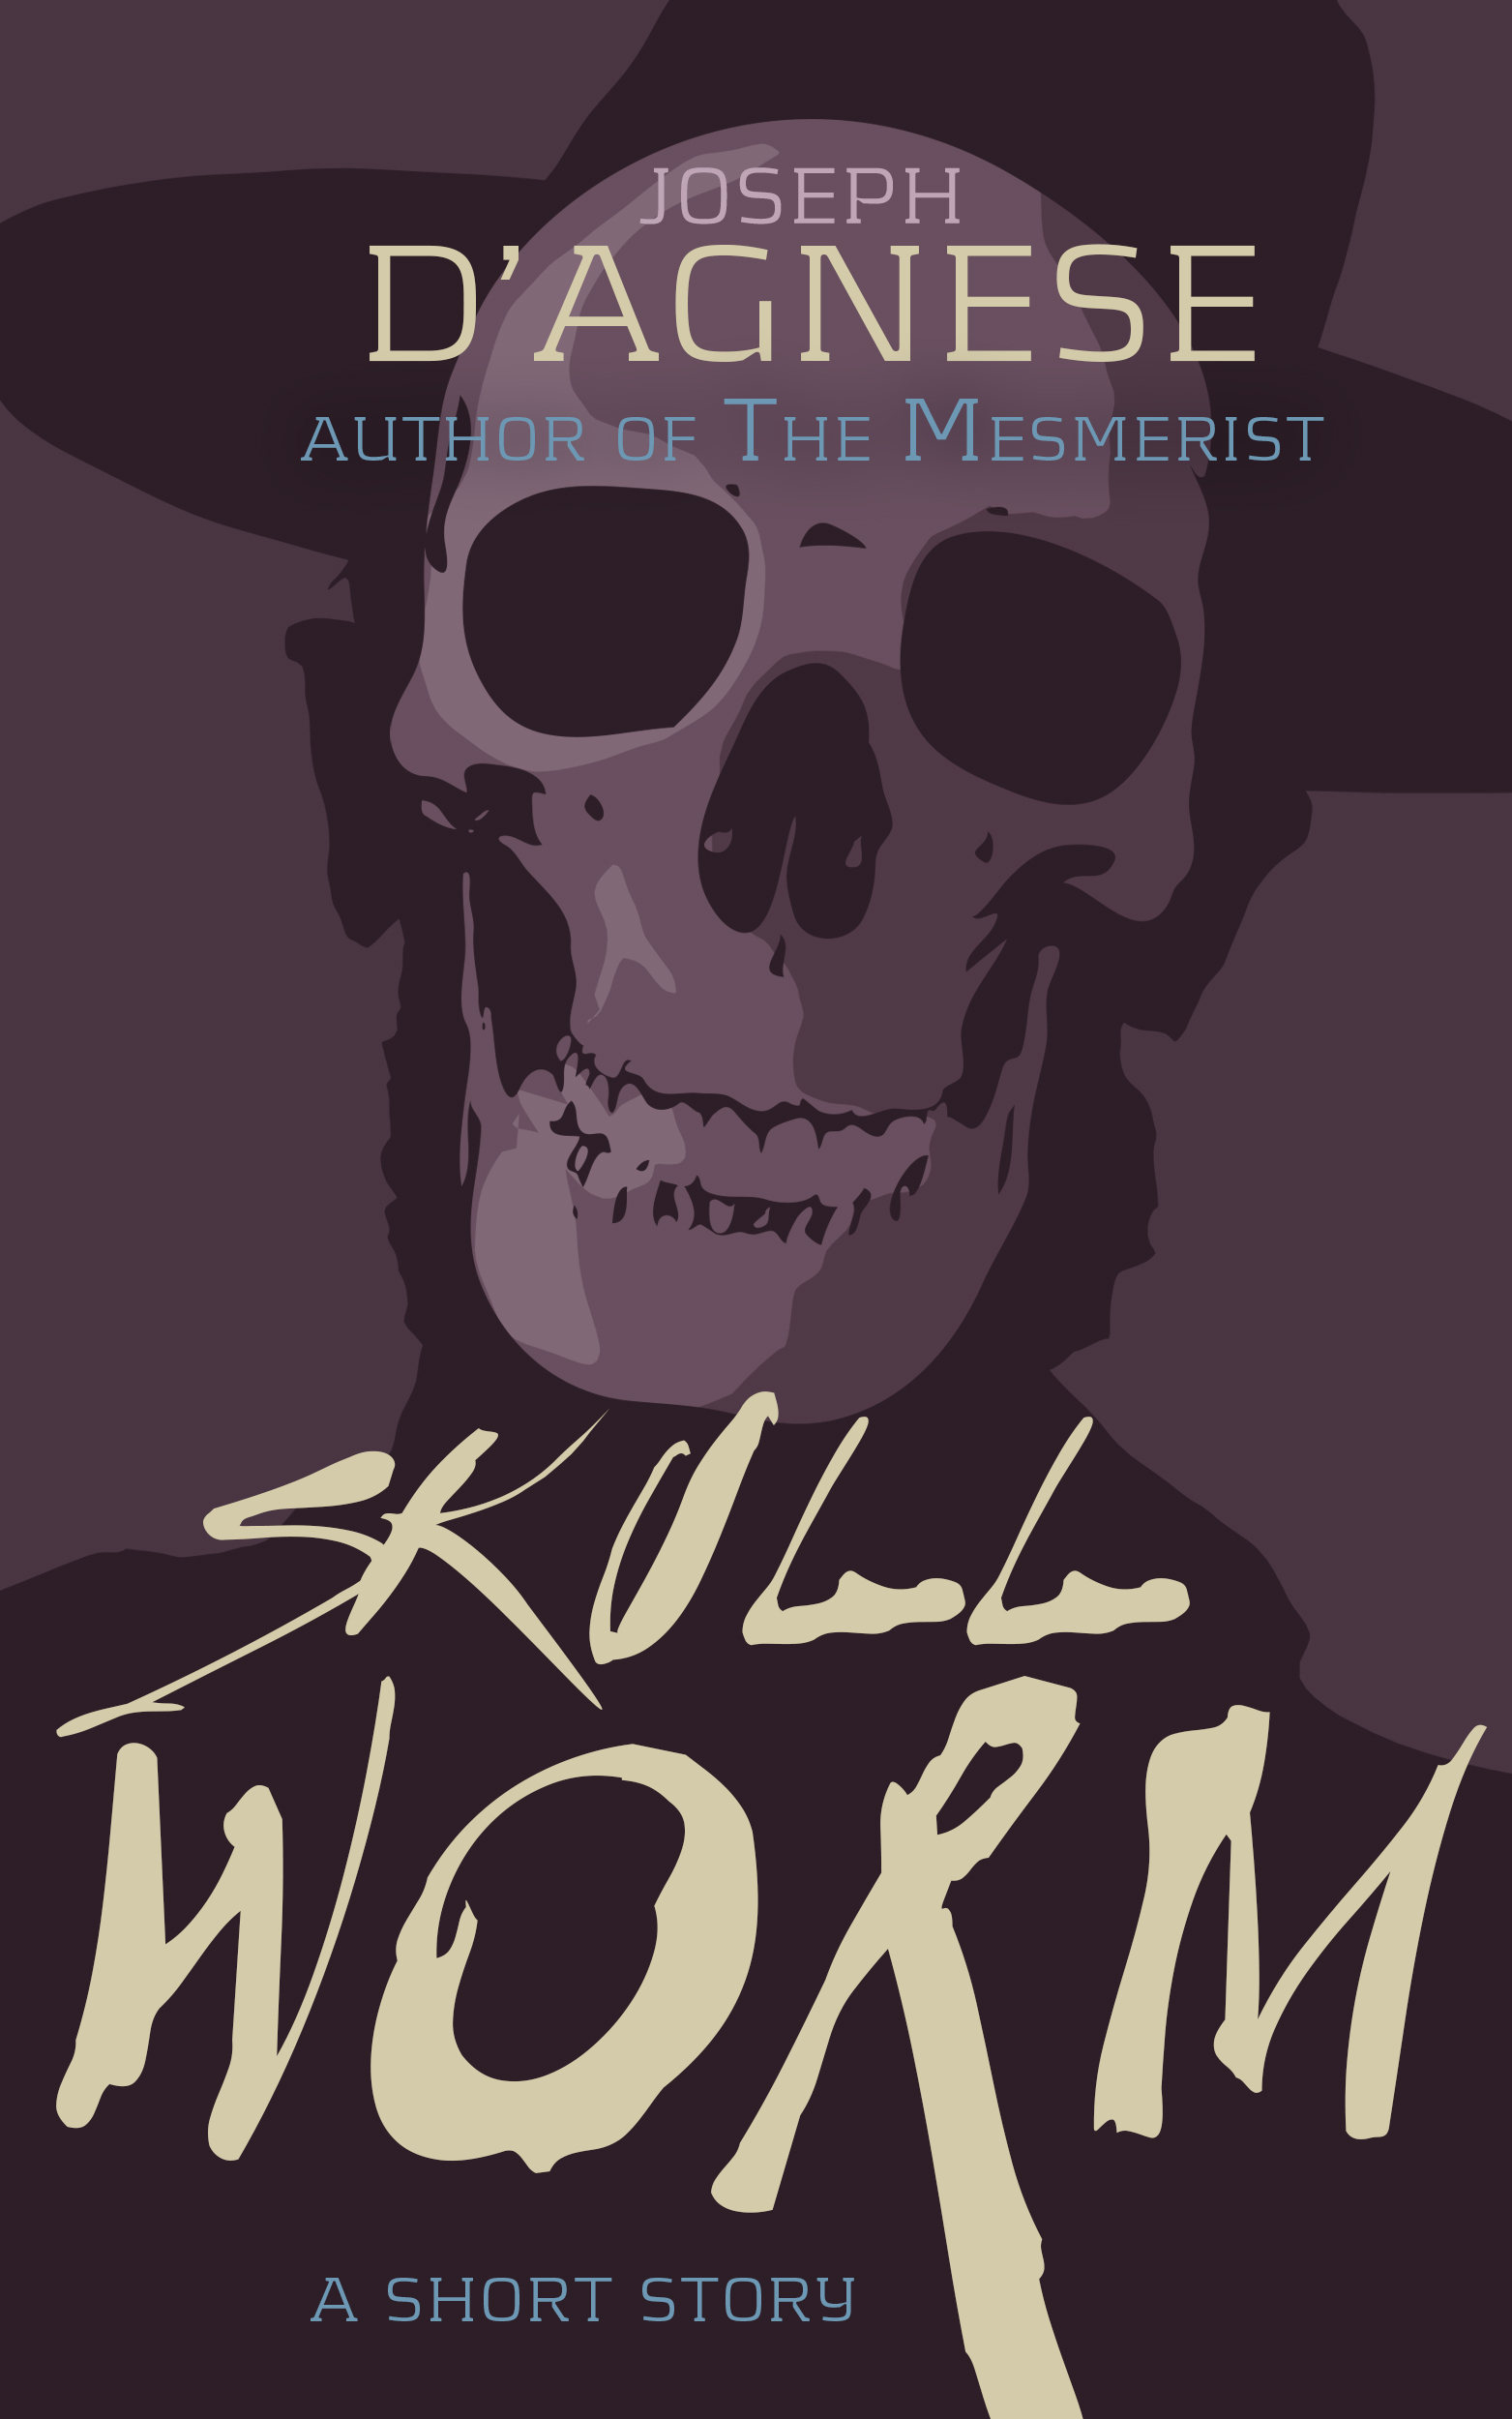 Skullworm by Joseph D'Agnese